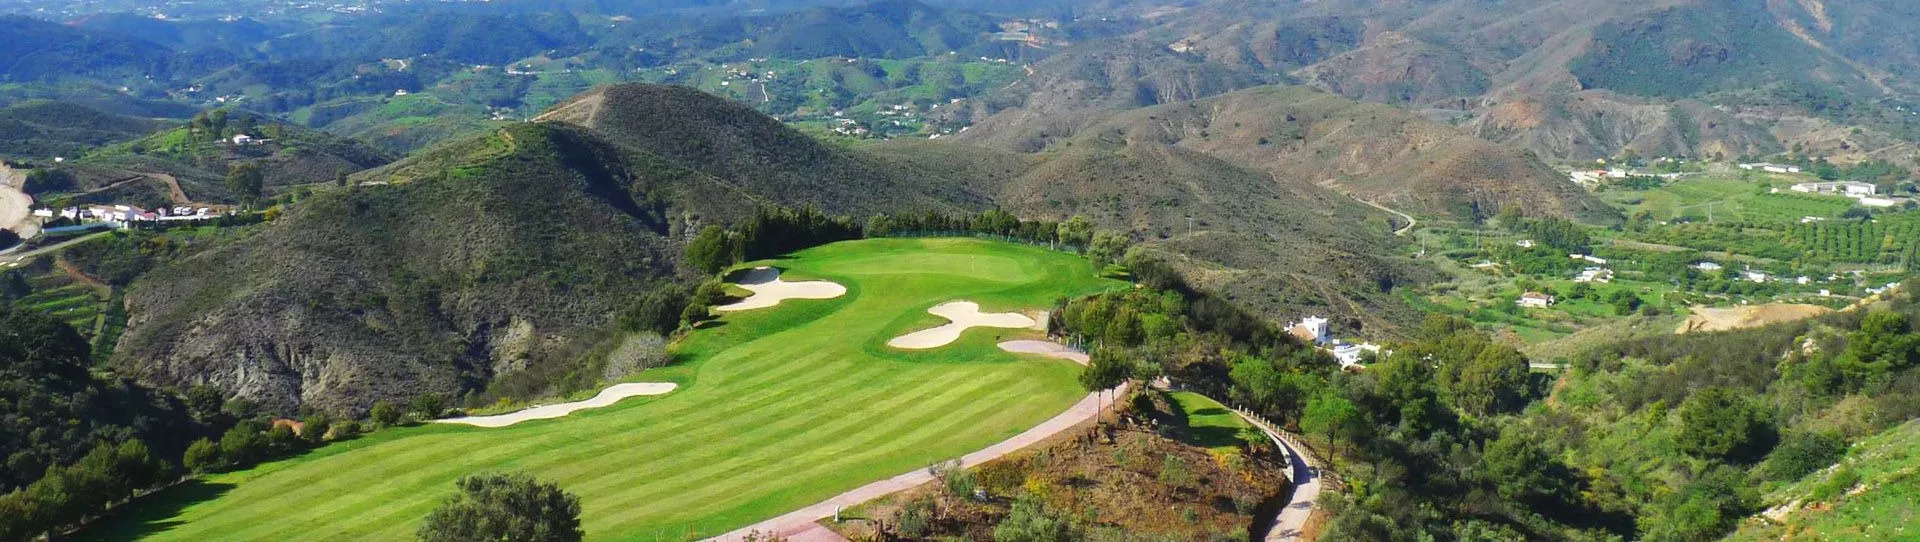 Spain golf courses - Alhaurin Golf Resort - Photo 1